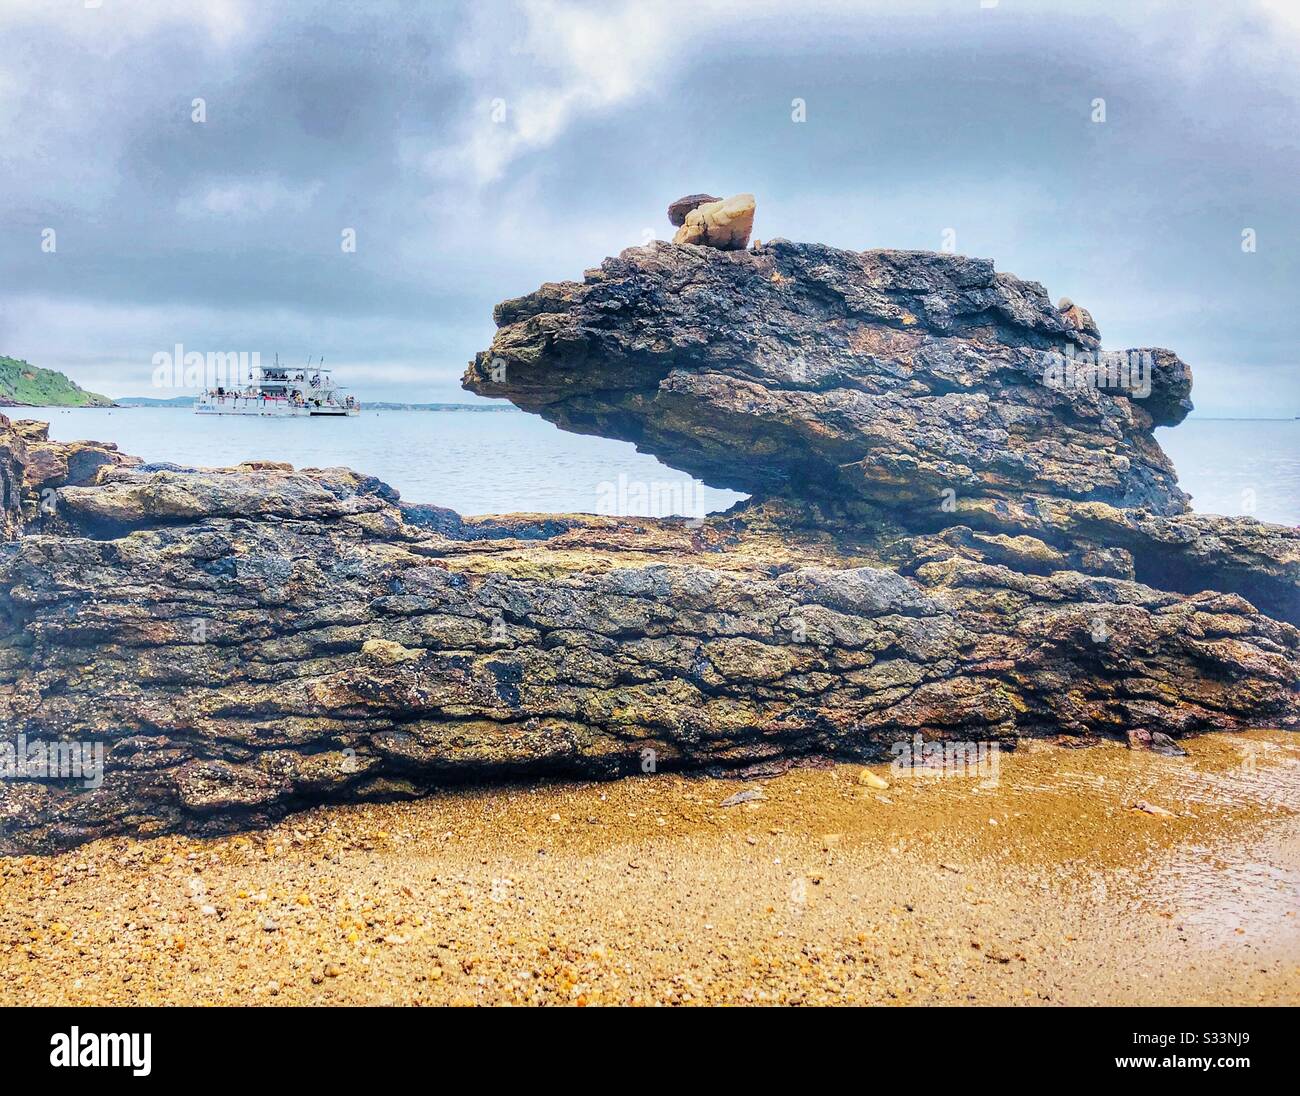 Rock formations on Tartaruga beach in Buzios, Brazil. Stock Photo